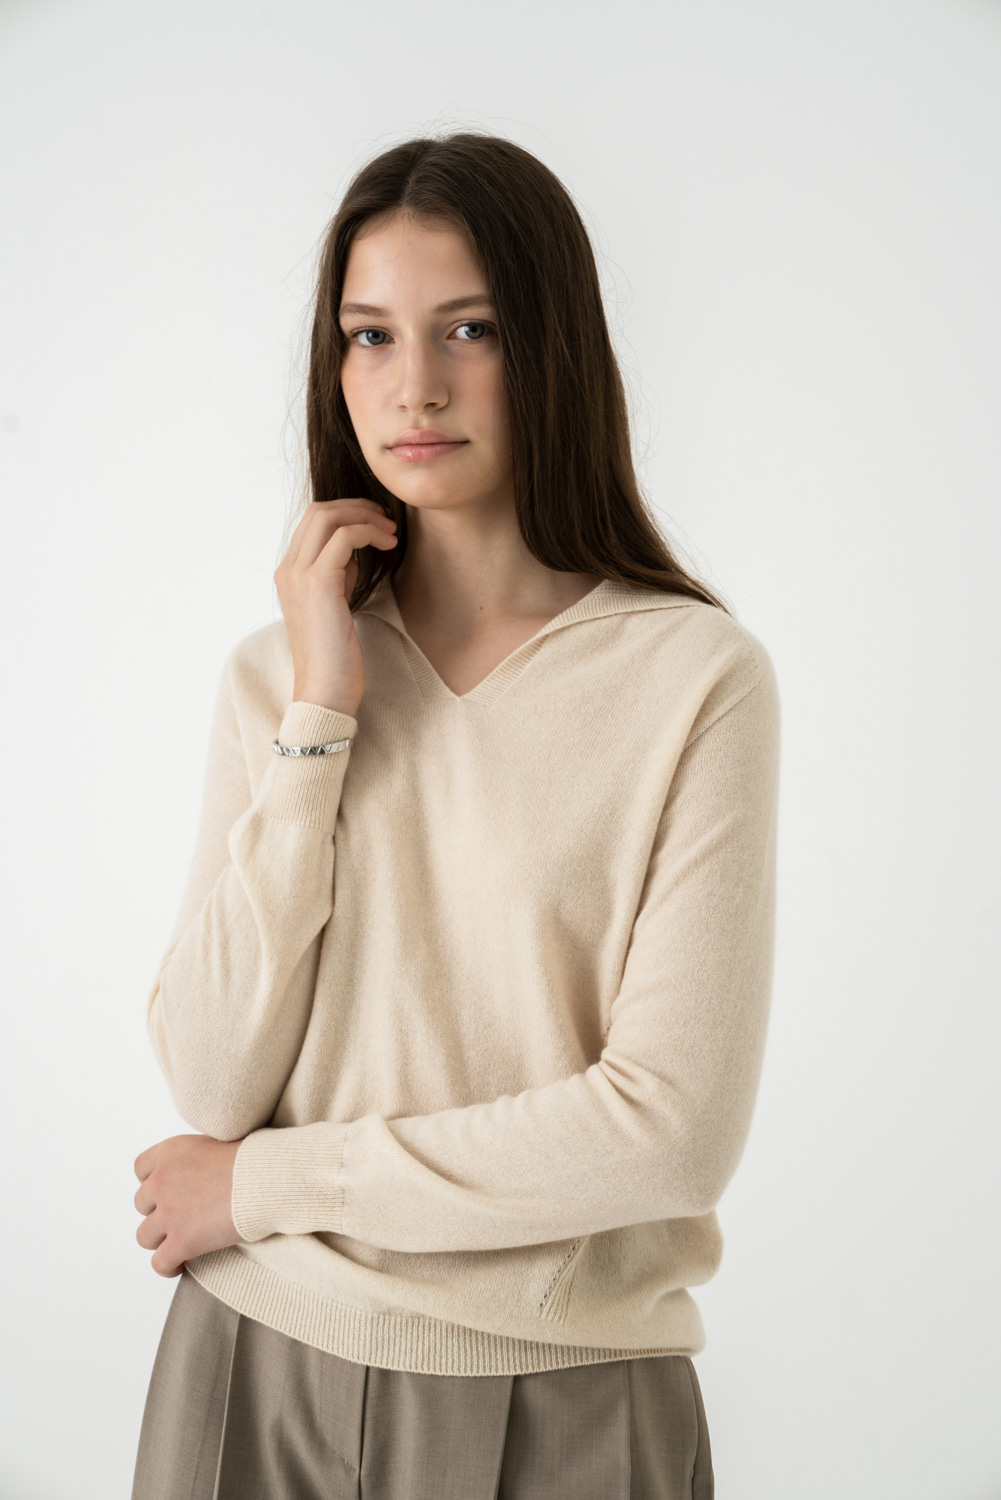 [Black label: Cariaggi] 프리미엄 이탈리안 캐시미어 100 브이넥 풀오버 Premium pure cashmere100 V neck pullover  - Cream beige